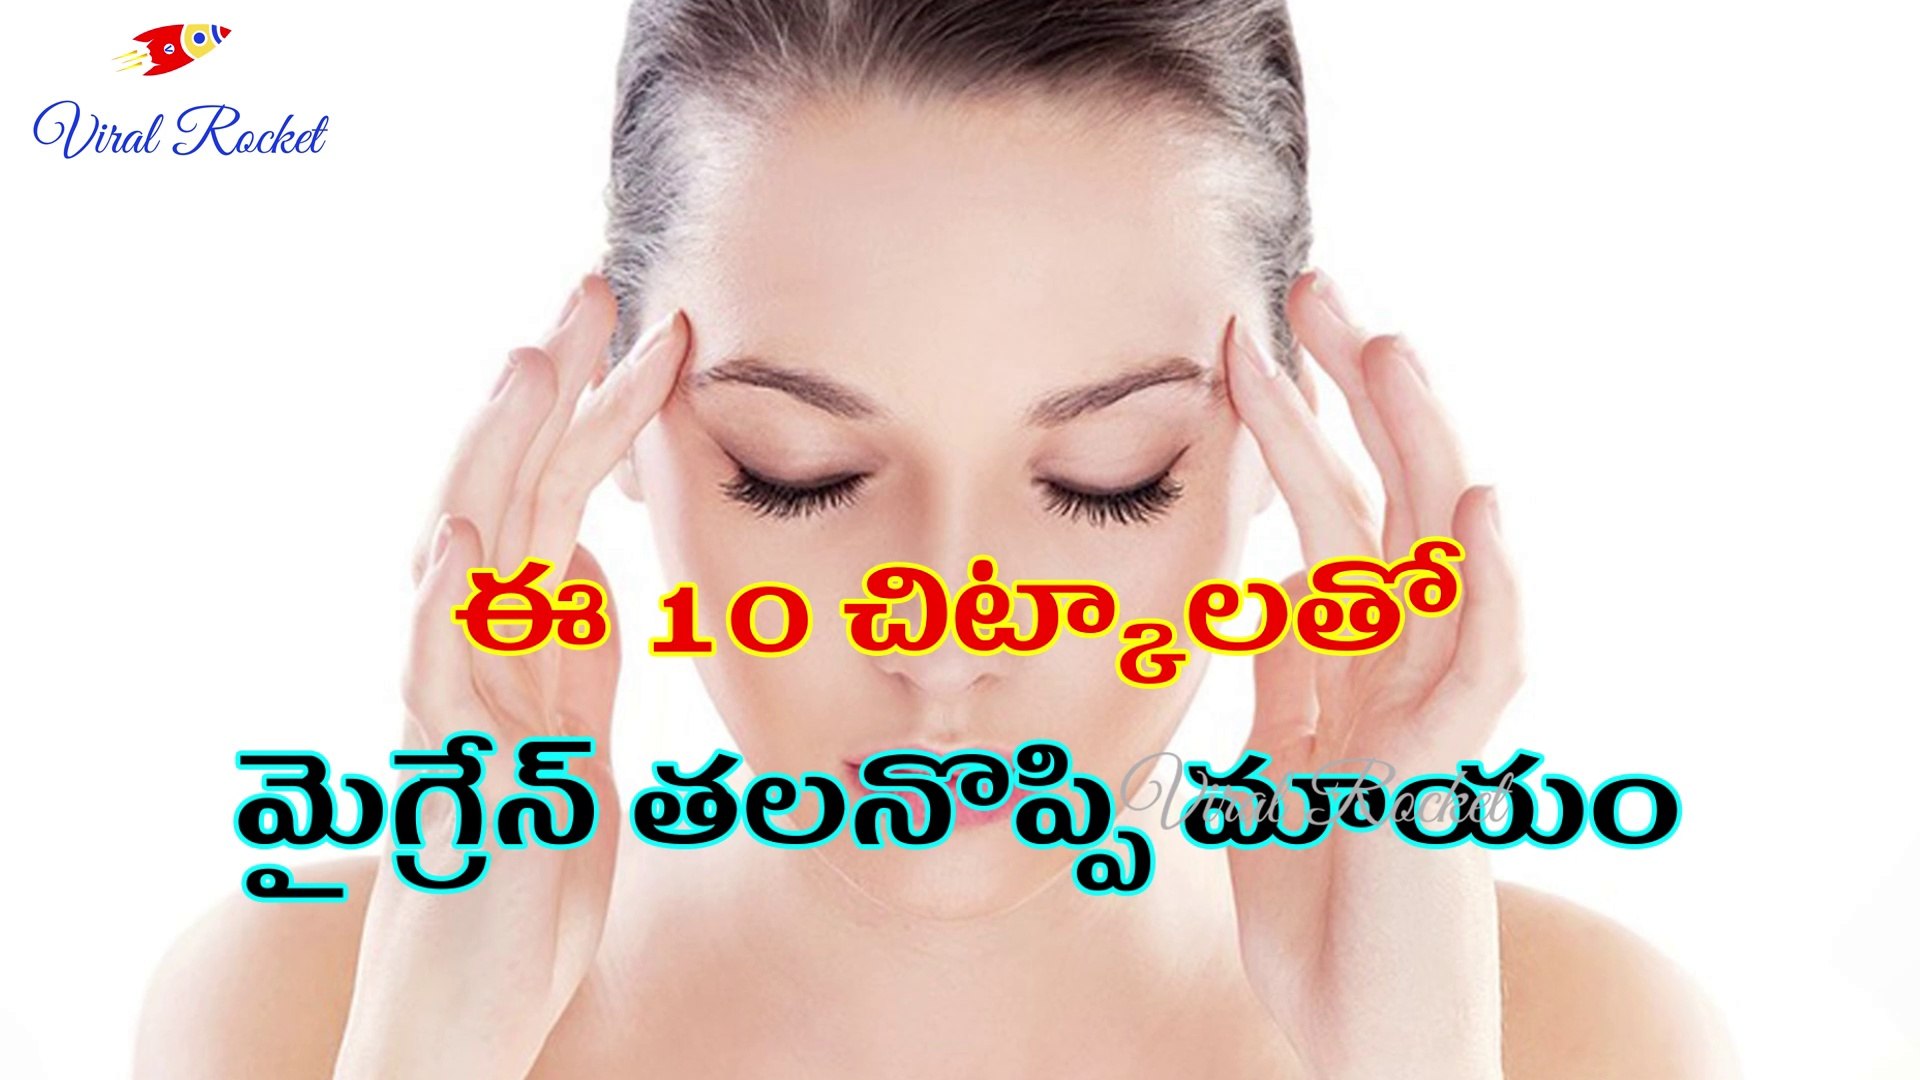 Top 10 Migraine Headache Remedies In Telugu | How to reduce migrain  headache with Home Remedies in telugu || Viral Rocket - video Dailymotion